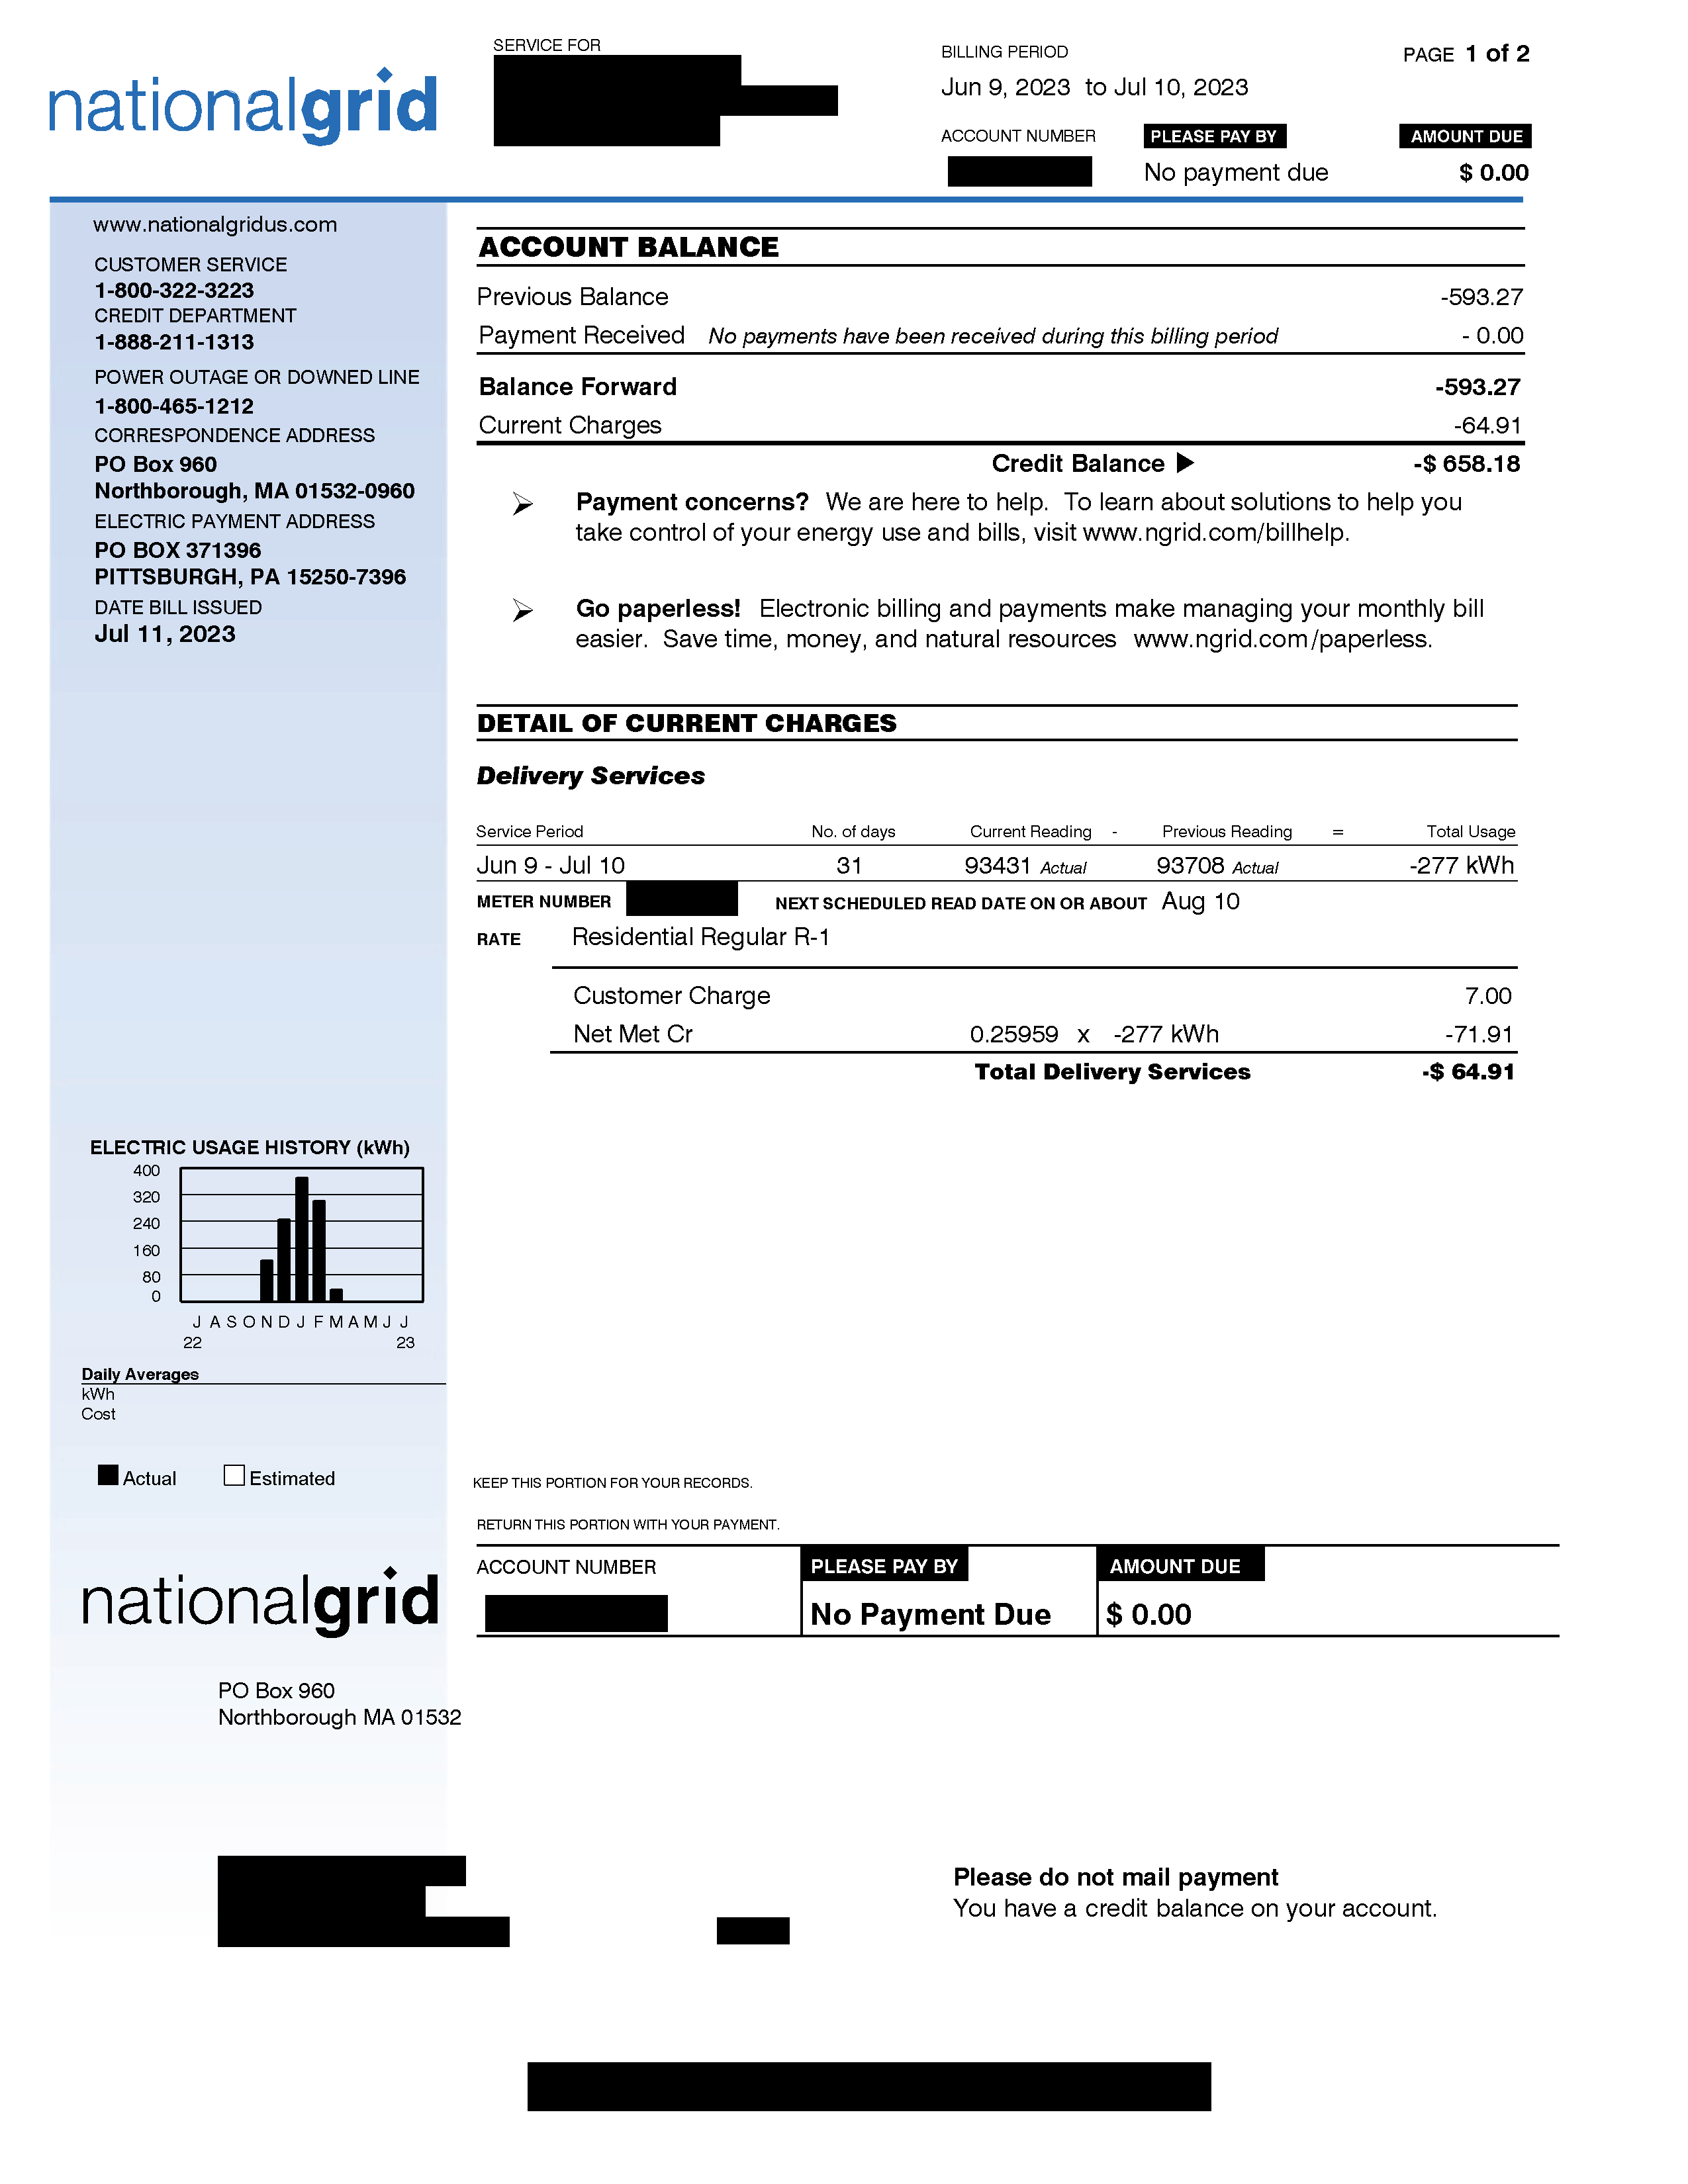 Solar – Net Metering Bill - Page One